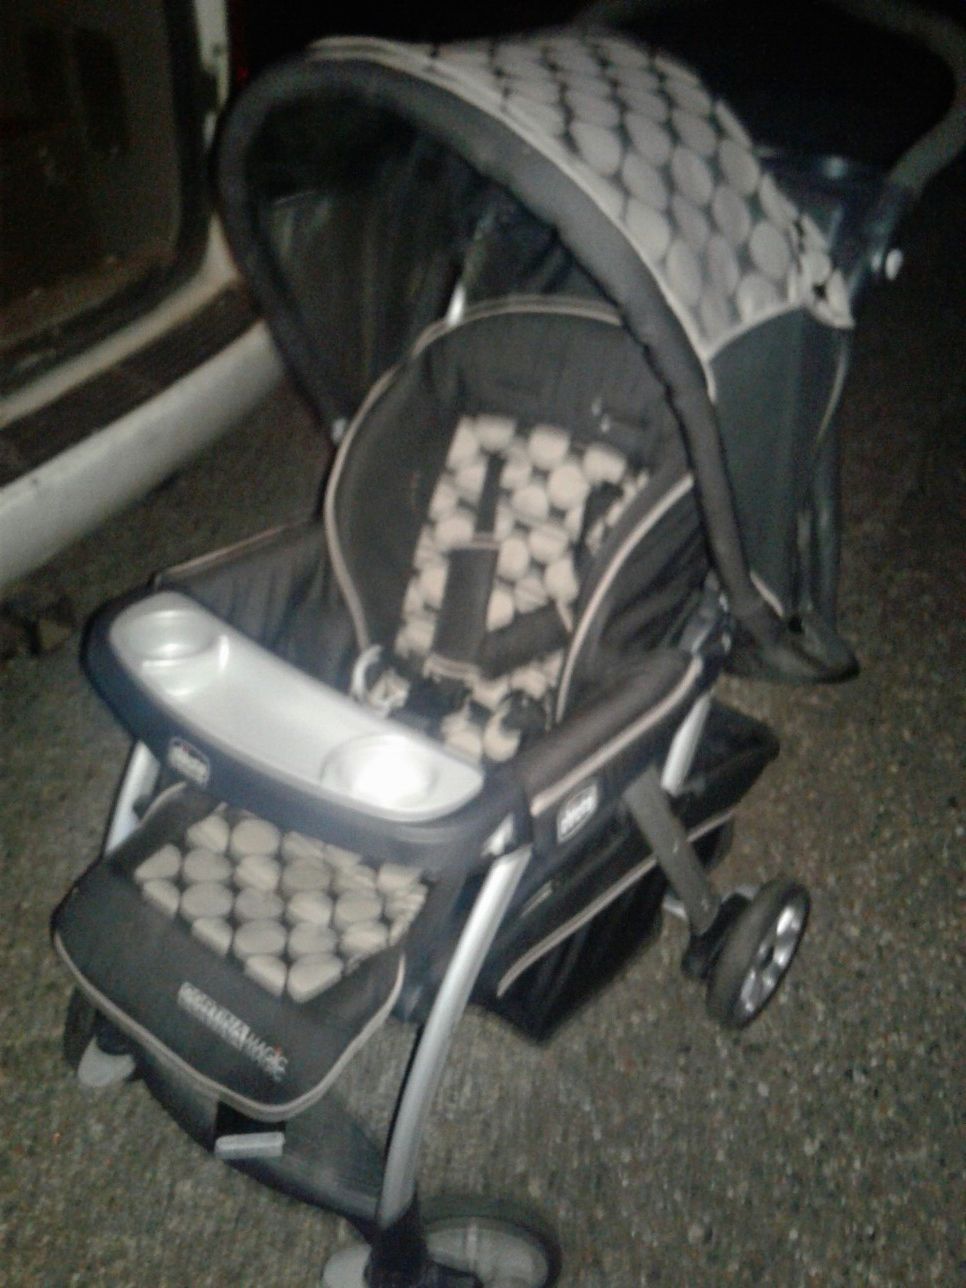 $50 Kids stroller brand new chicco brand